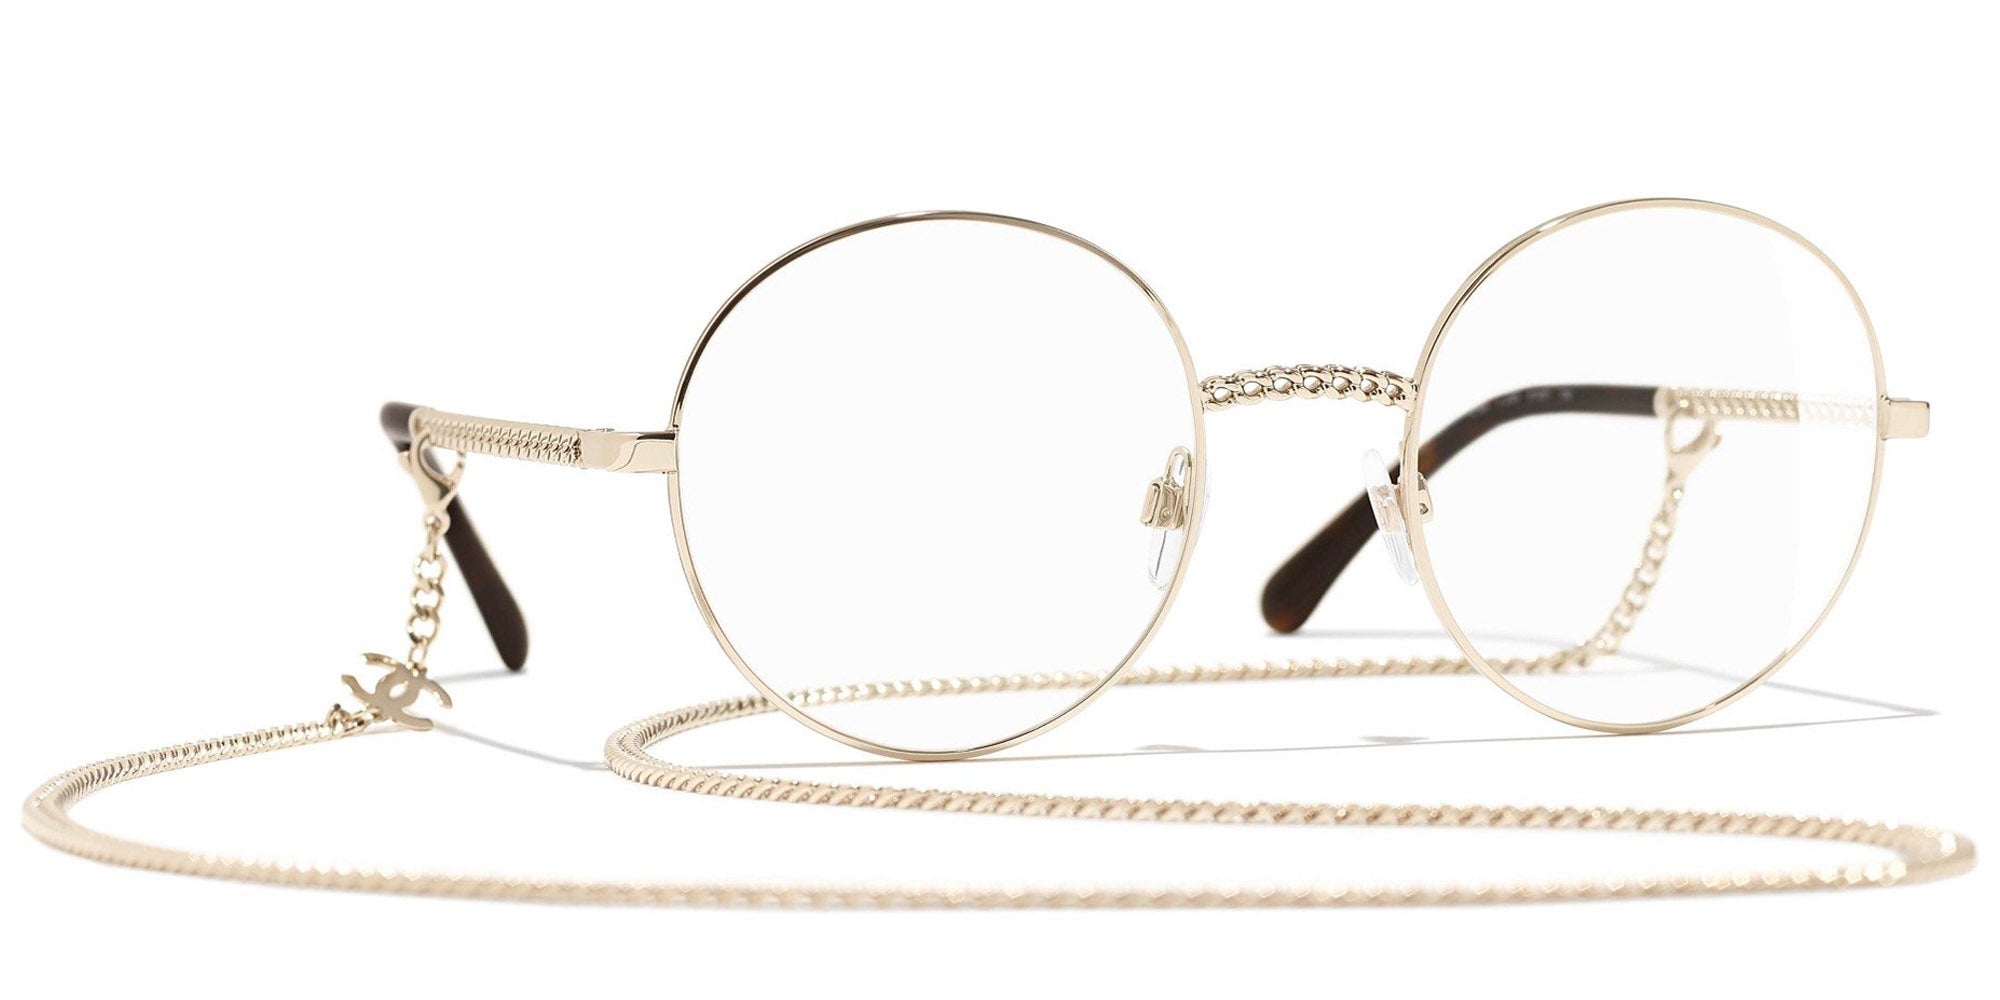 Shop CHANEL Unisex Round Eyeglasses by cocofashion